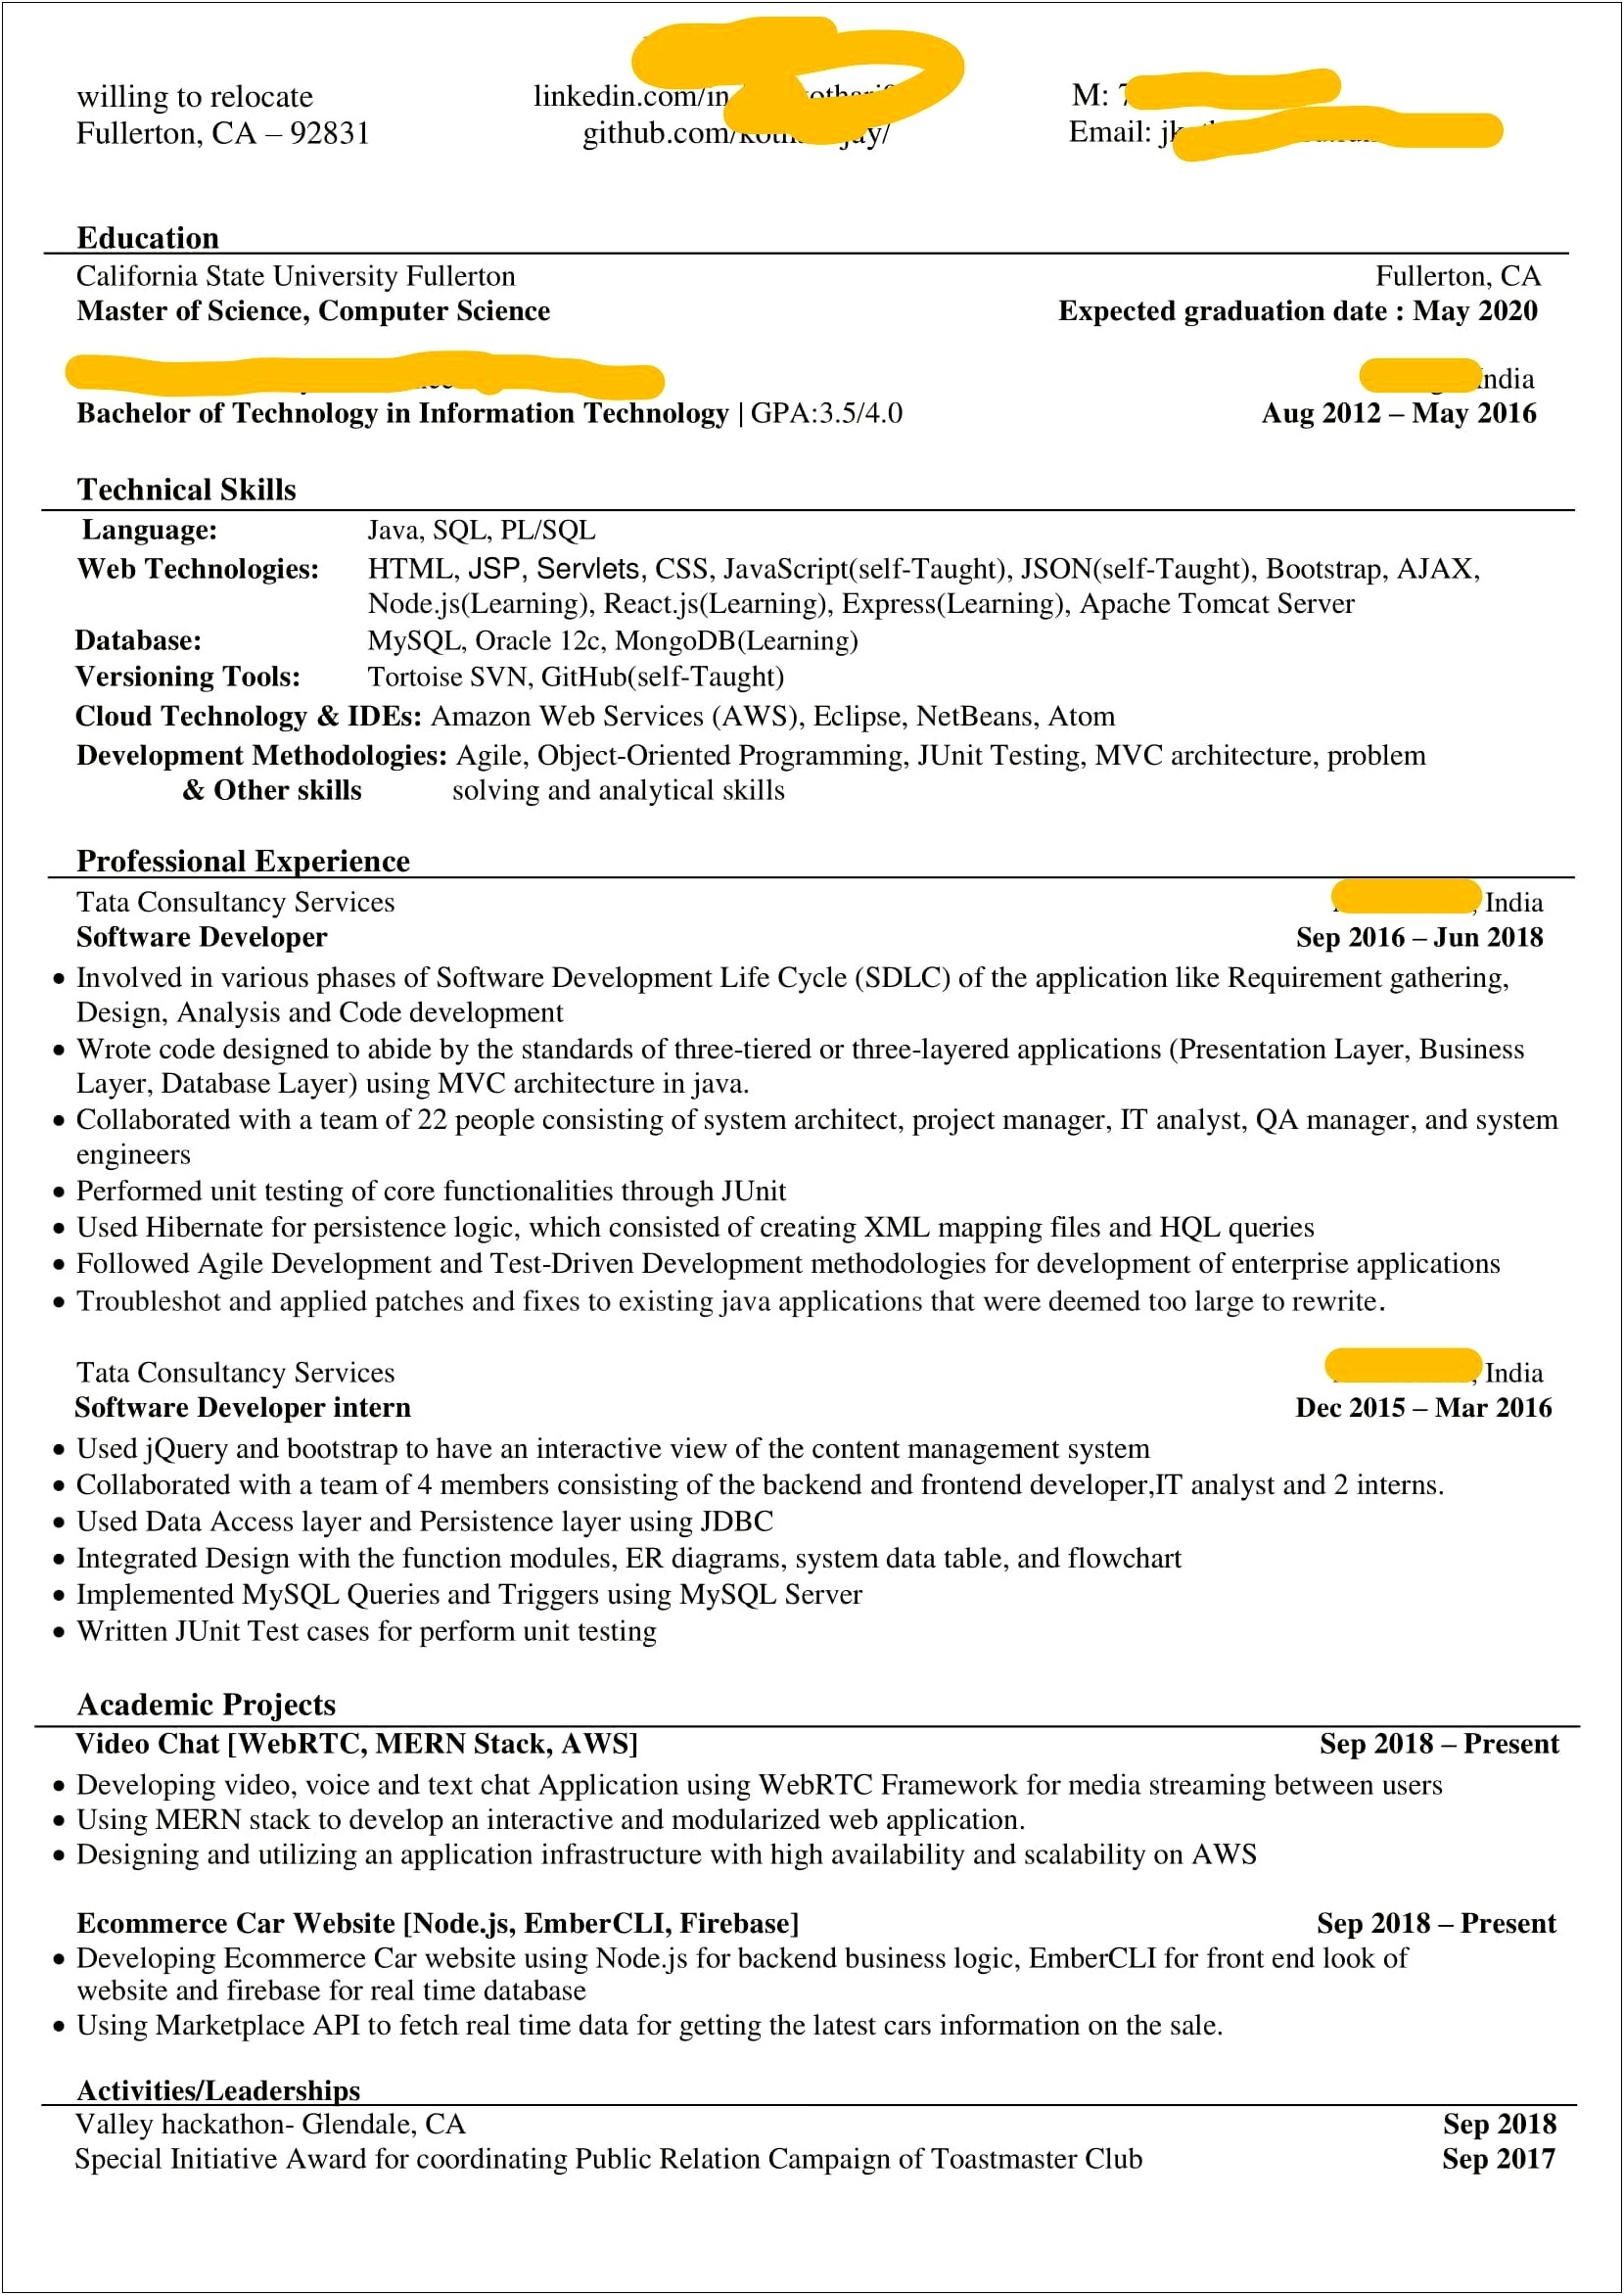 Go Resume.com Any Good Reddit